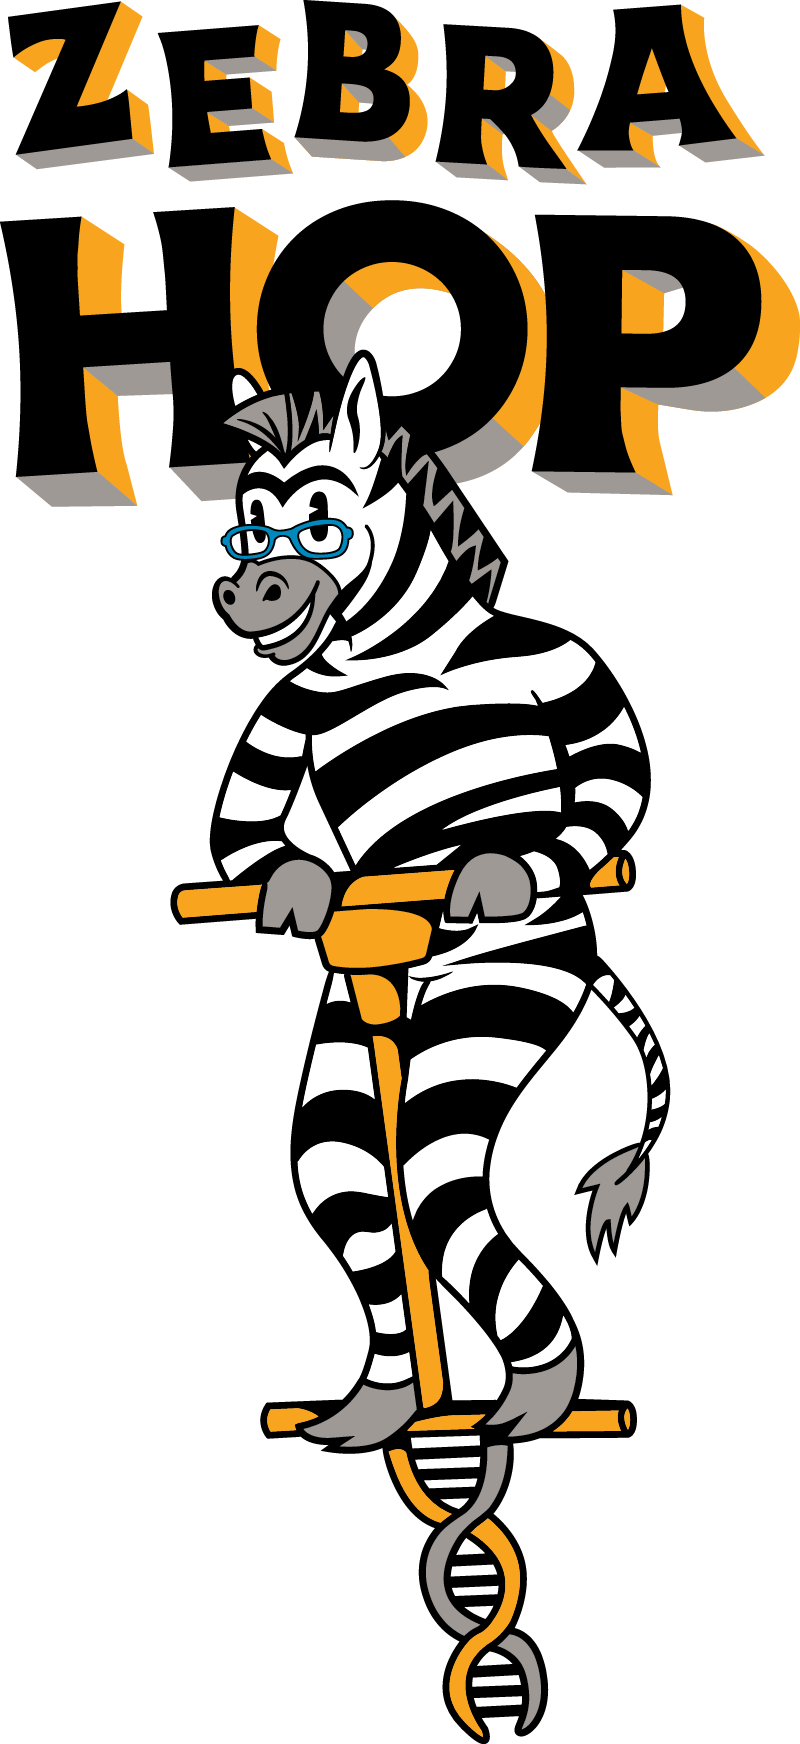 Zebra Hops logo with a zebra hopping 